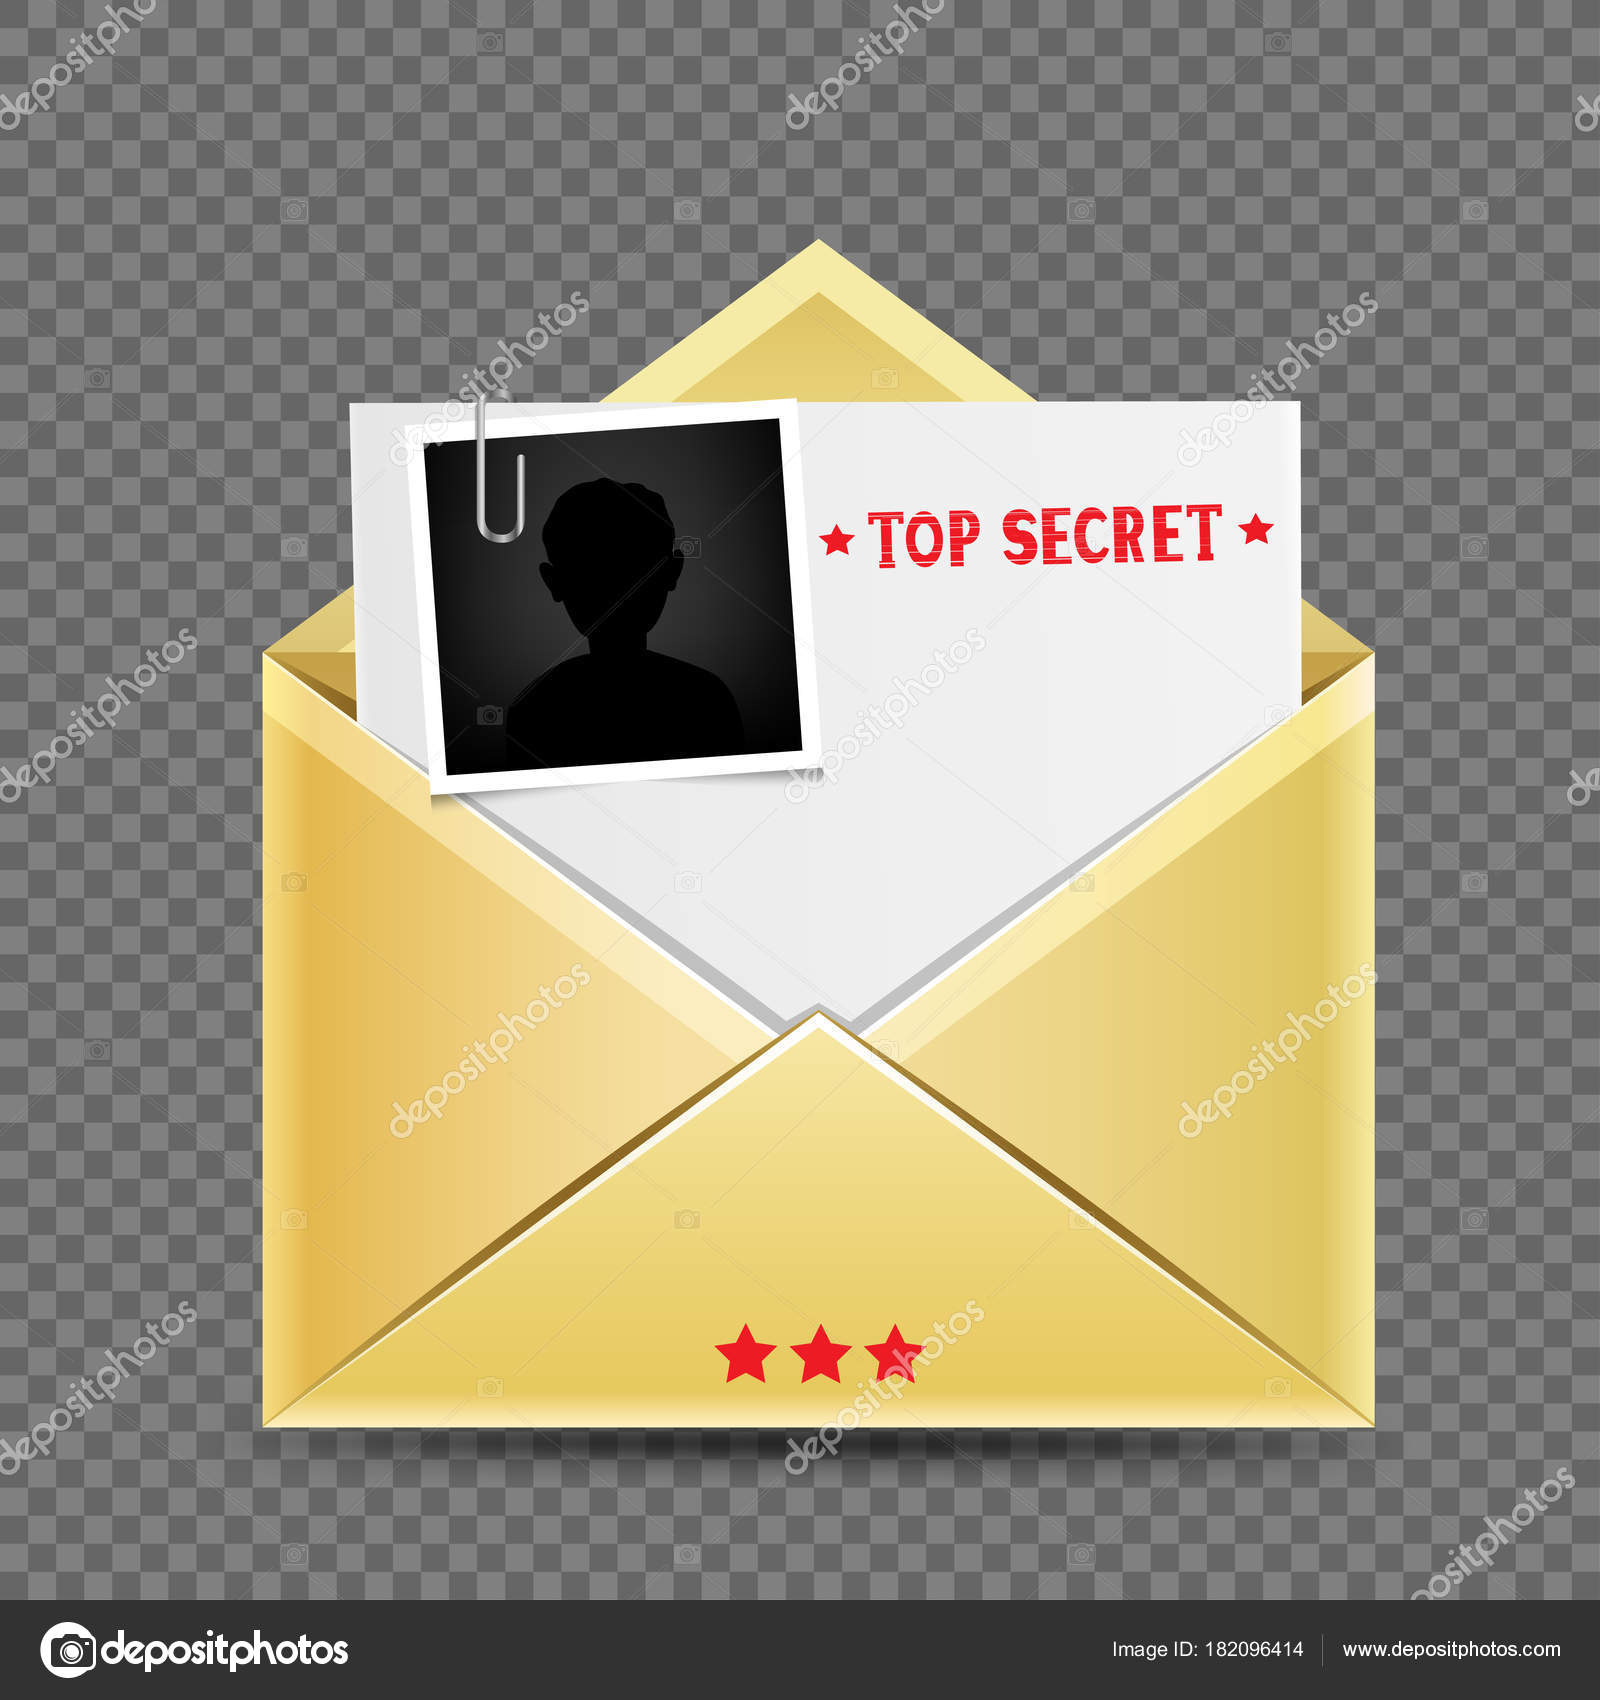 Download Top Secret Envelopet Letter Template Stock Vector Royalty Free Vector Image By C Romvo79 182096414